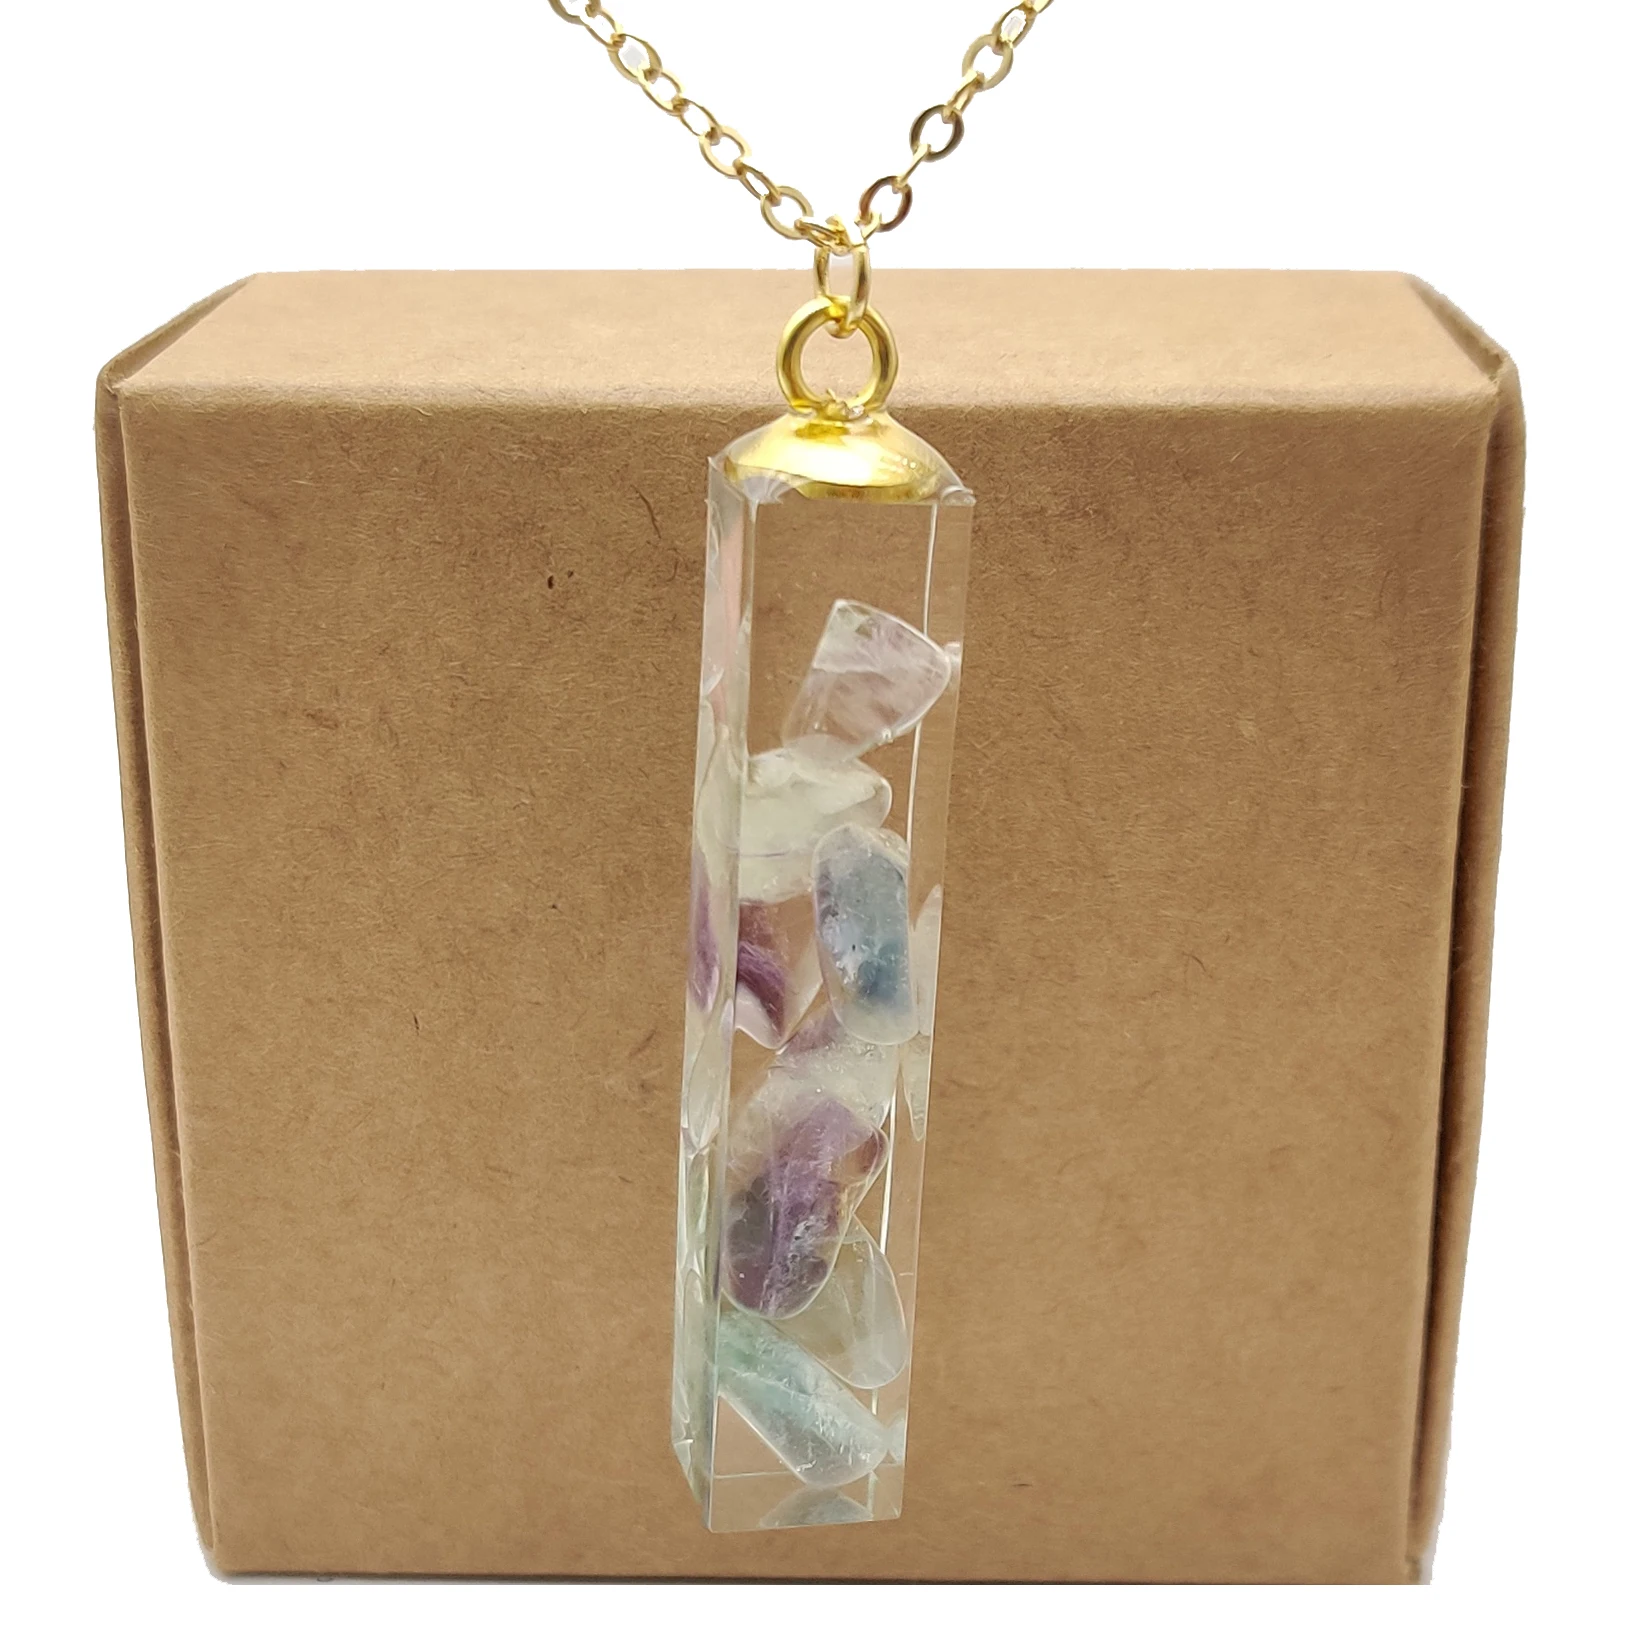 Fluorite Natural Stone Cube Resin Gold Color Pendant Chain Long Necklace Women Boho Fashion Jewelry Bohemian Vintage Handmade